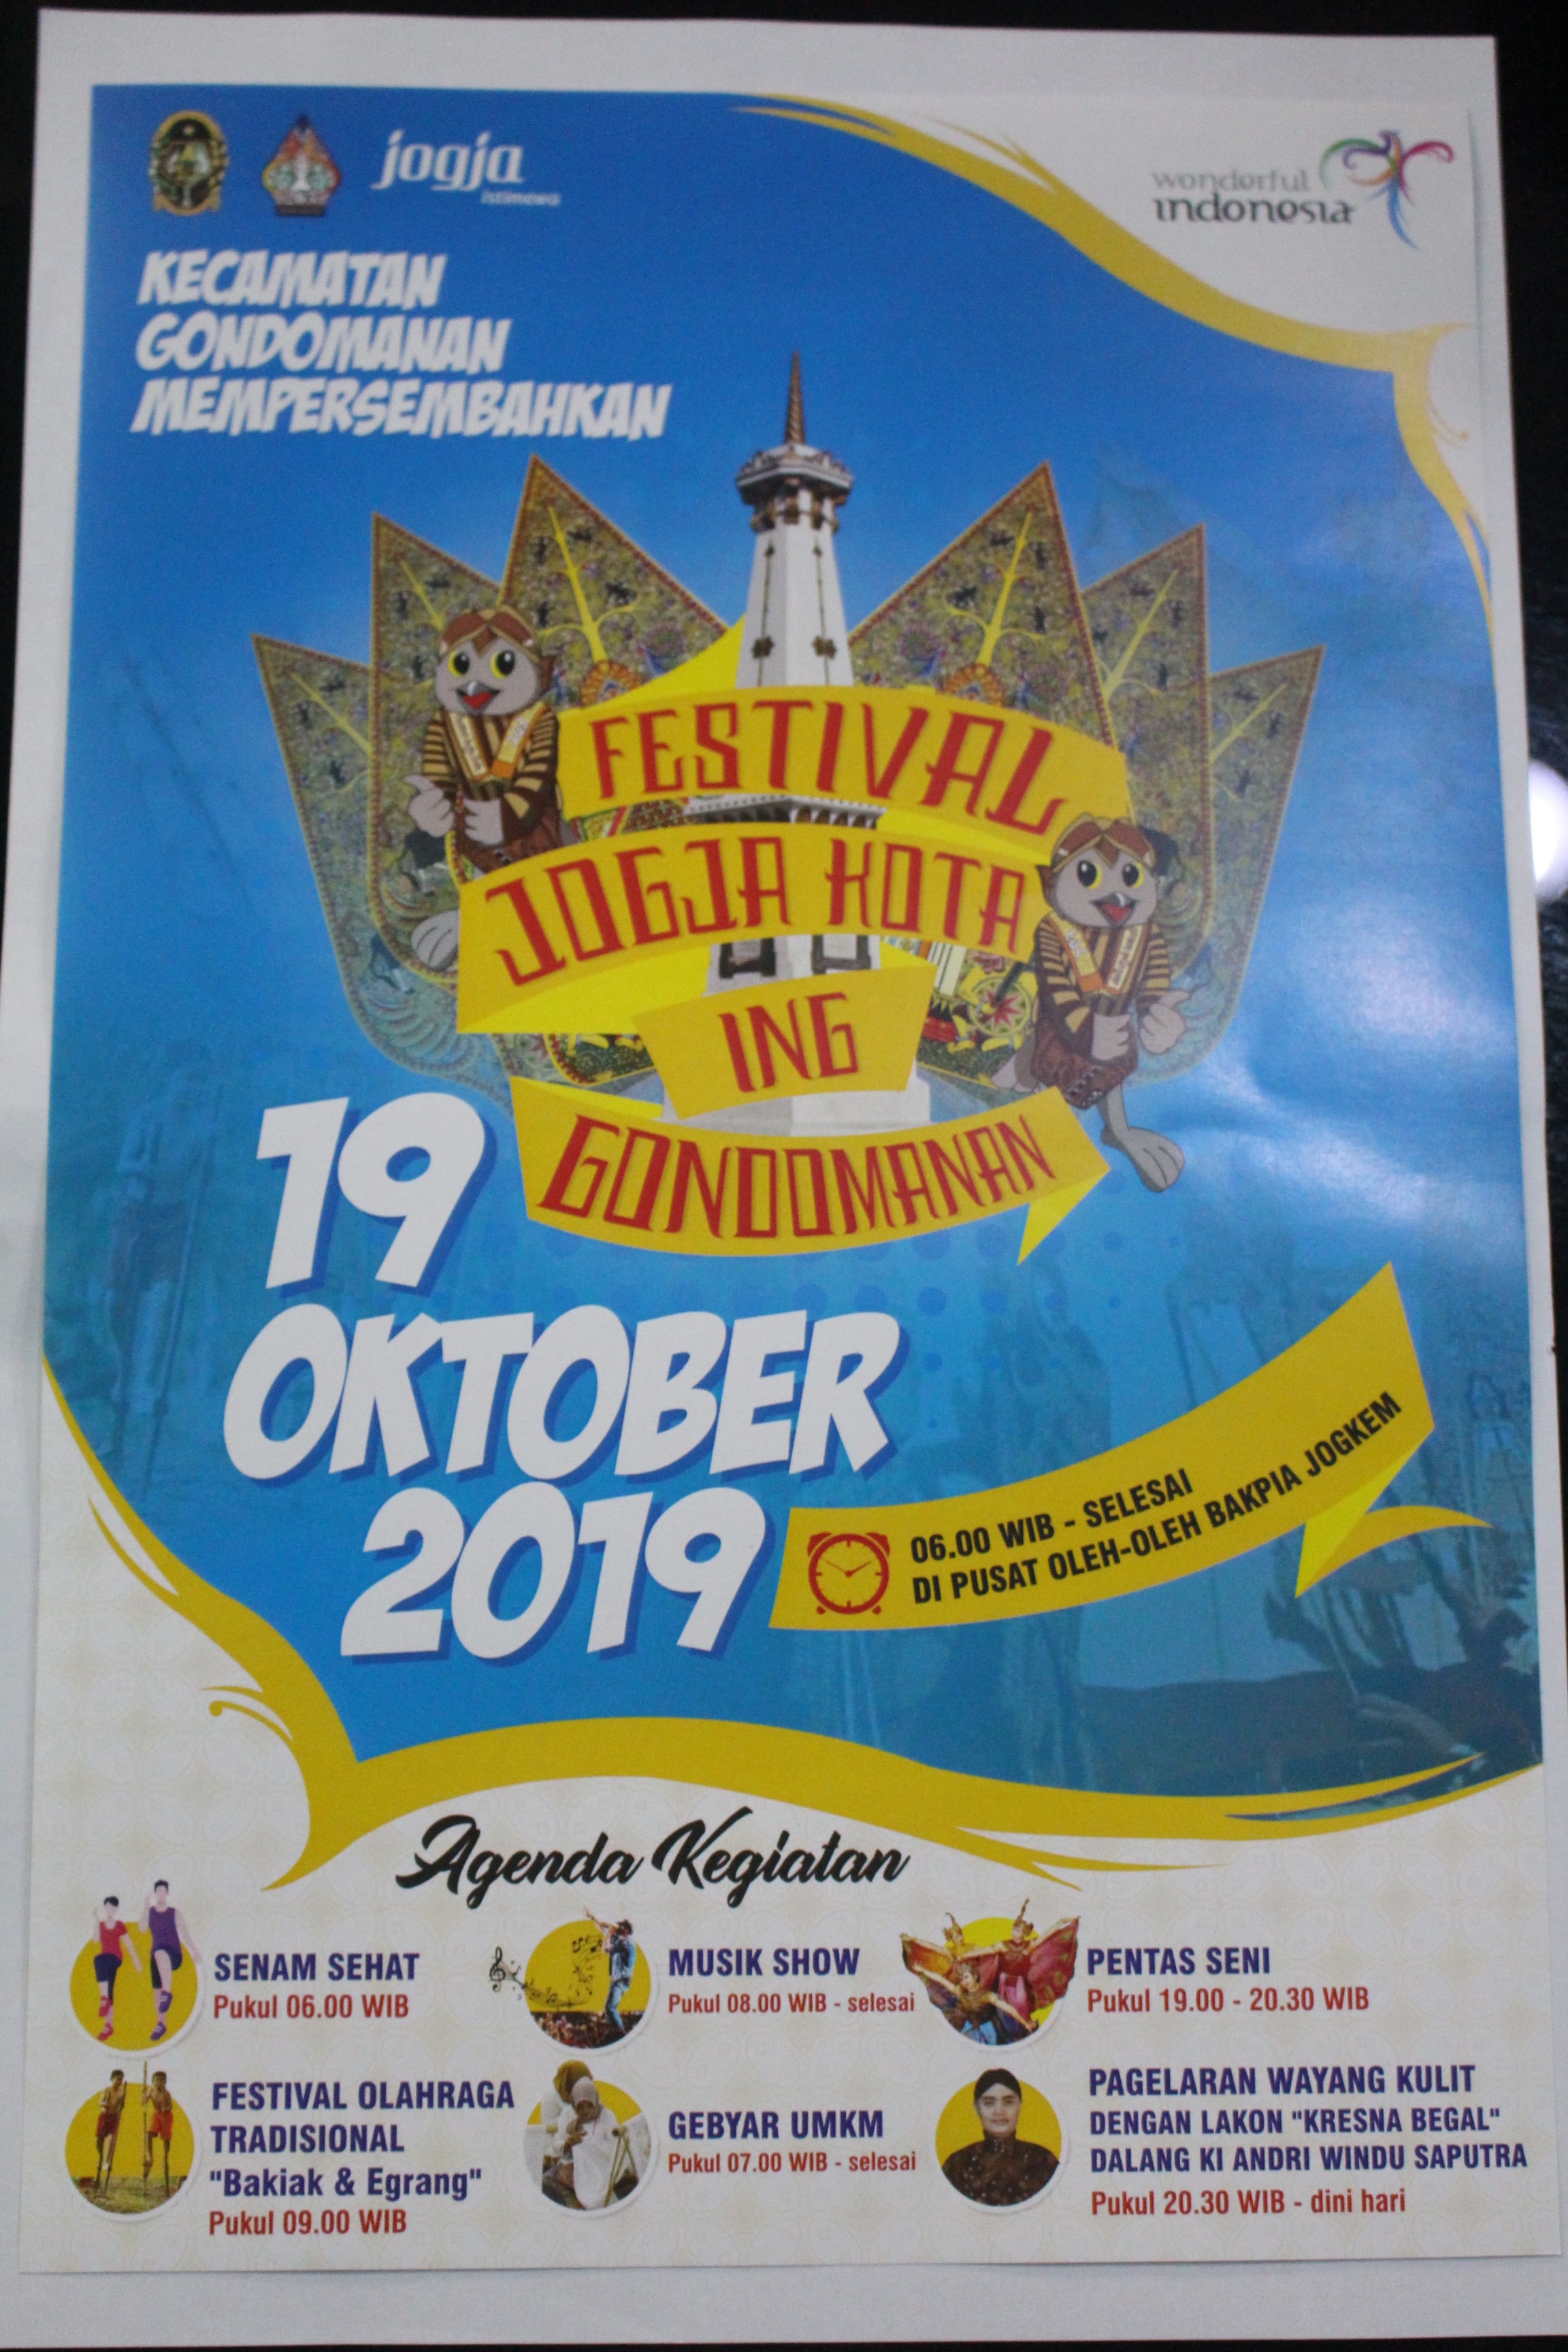 Festival Jogja Kota Ing Gondomanan dalam rangka HUT Kota Jogja yang Ke 263